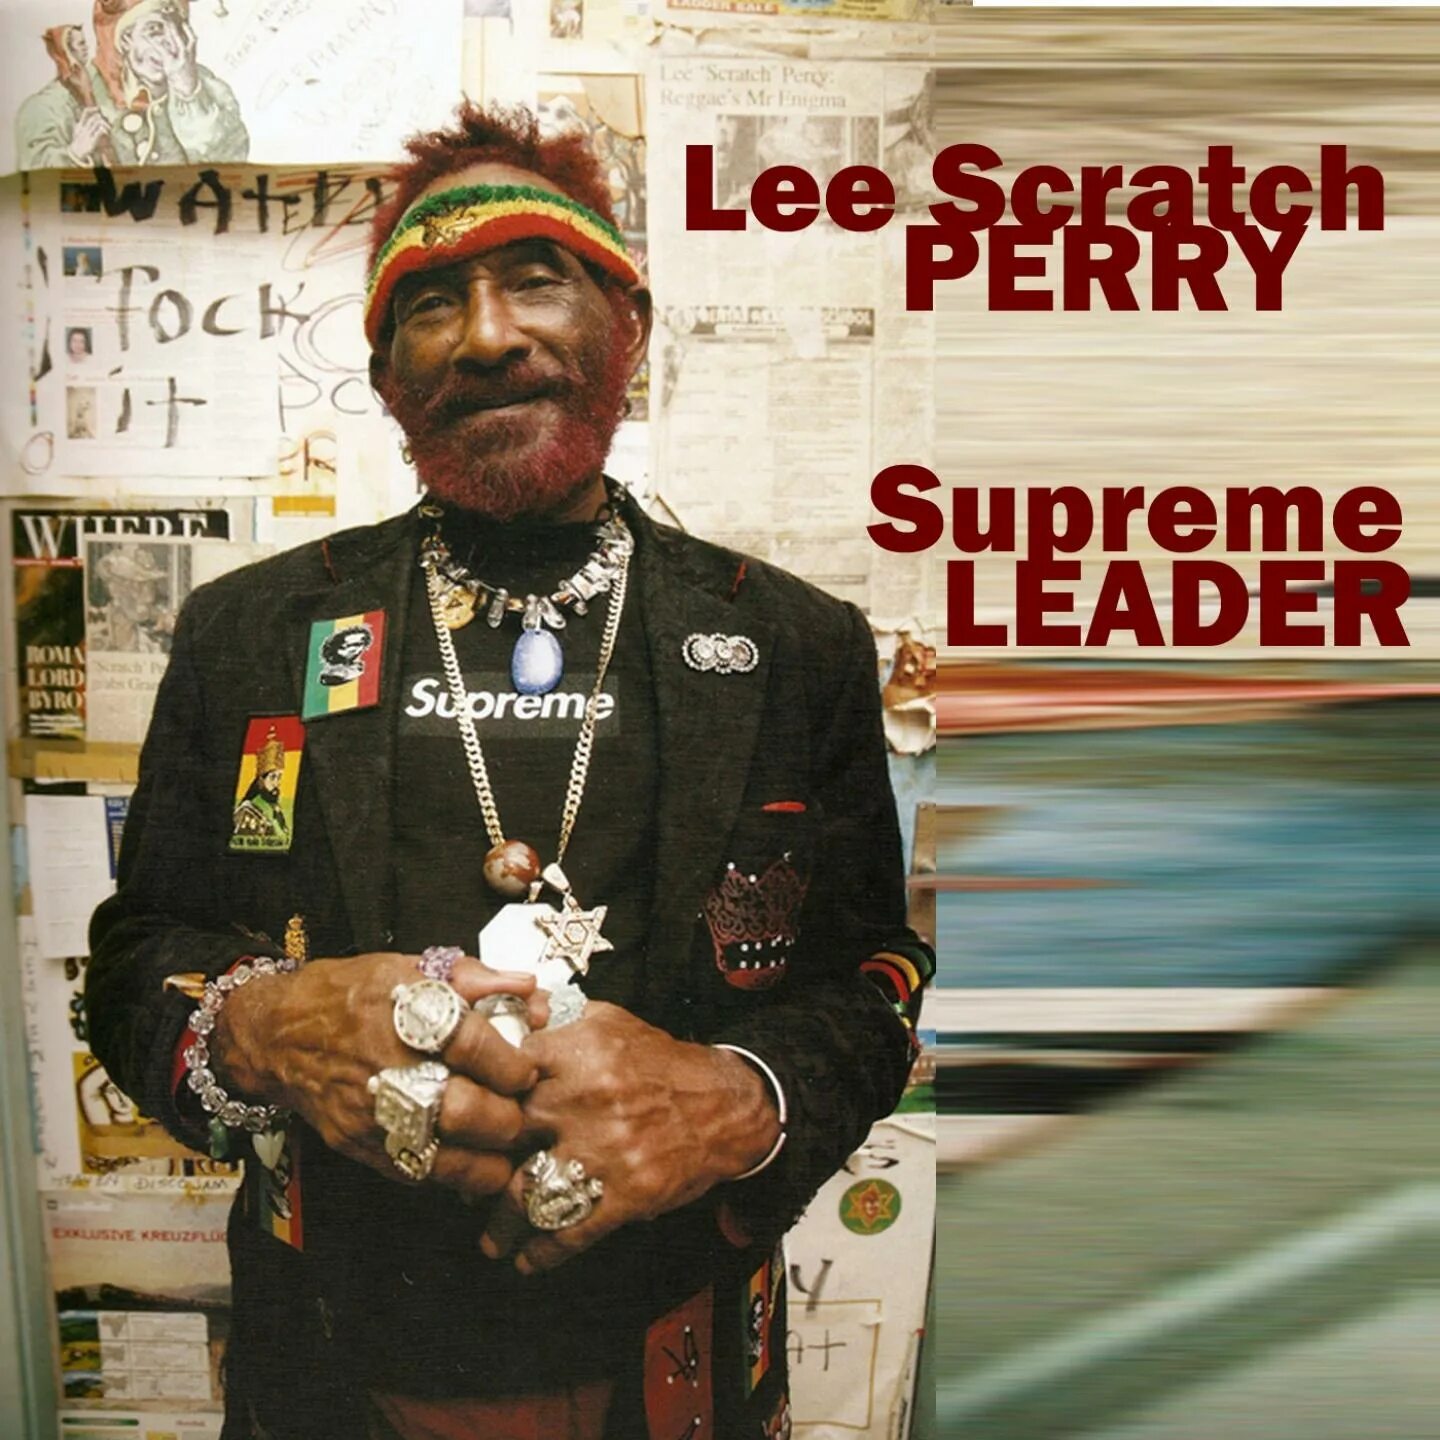 Lee Scratch Perry. Supreme leader. Lee Scratch Perry Jah roots обложки. Ли Перри Lee "Scratch" Perry. Me dick песня